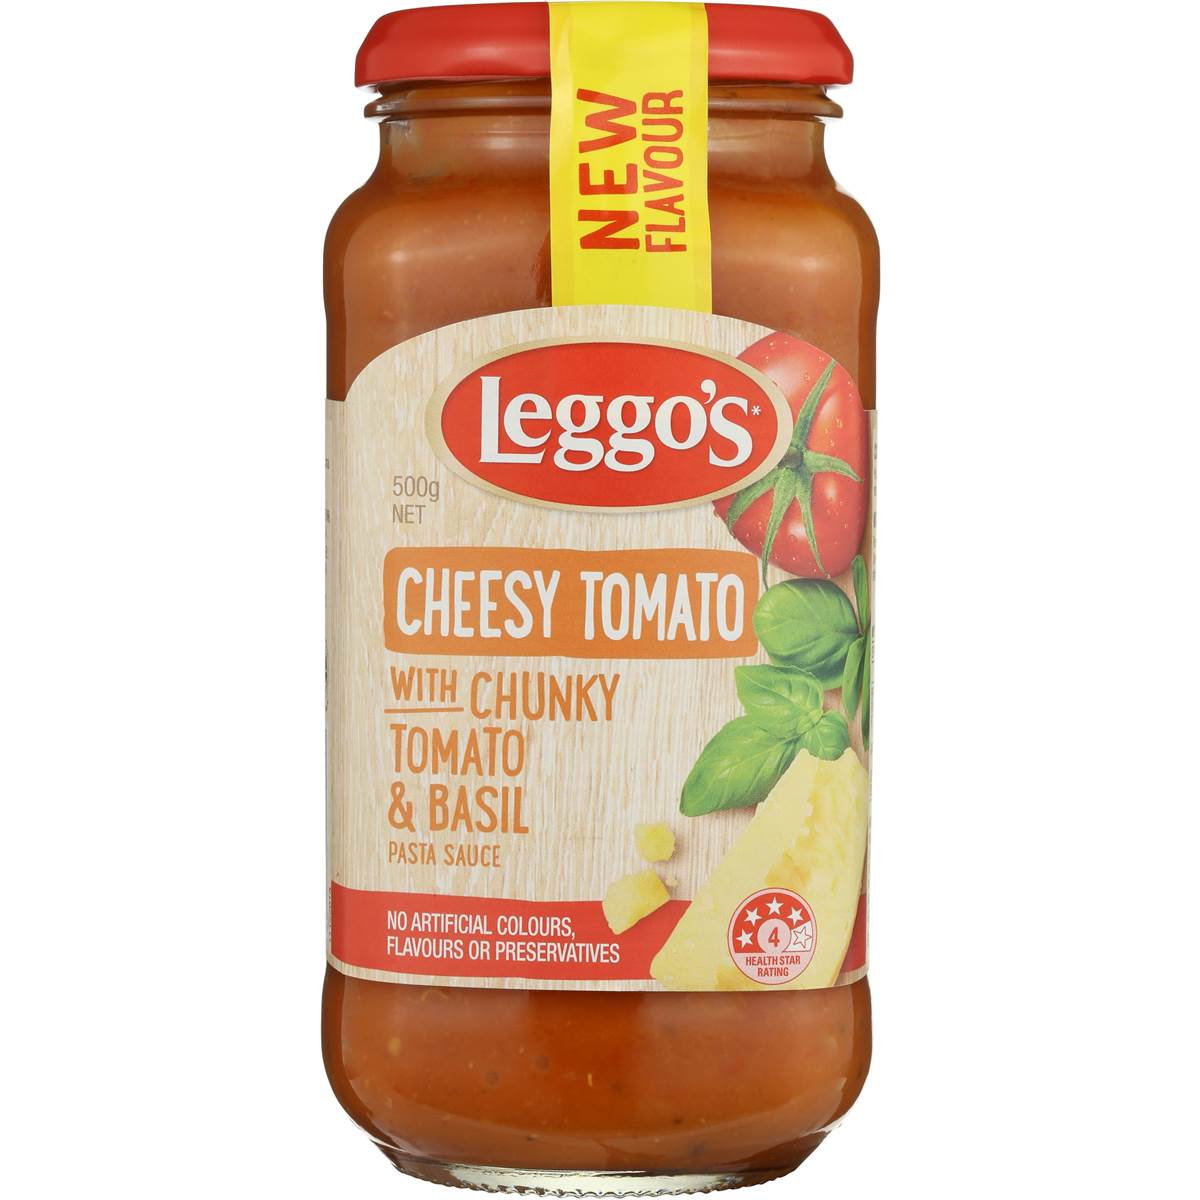 Leggos Pasta Sauce Cheesy Tomato